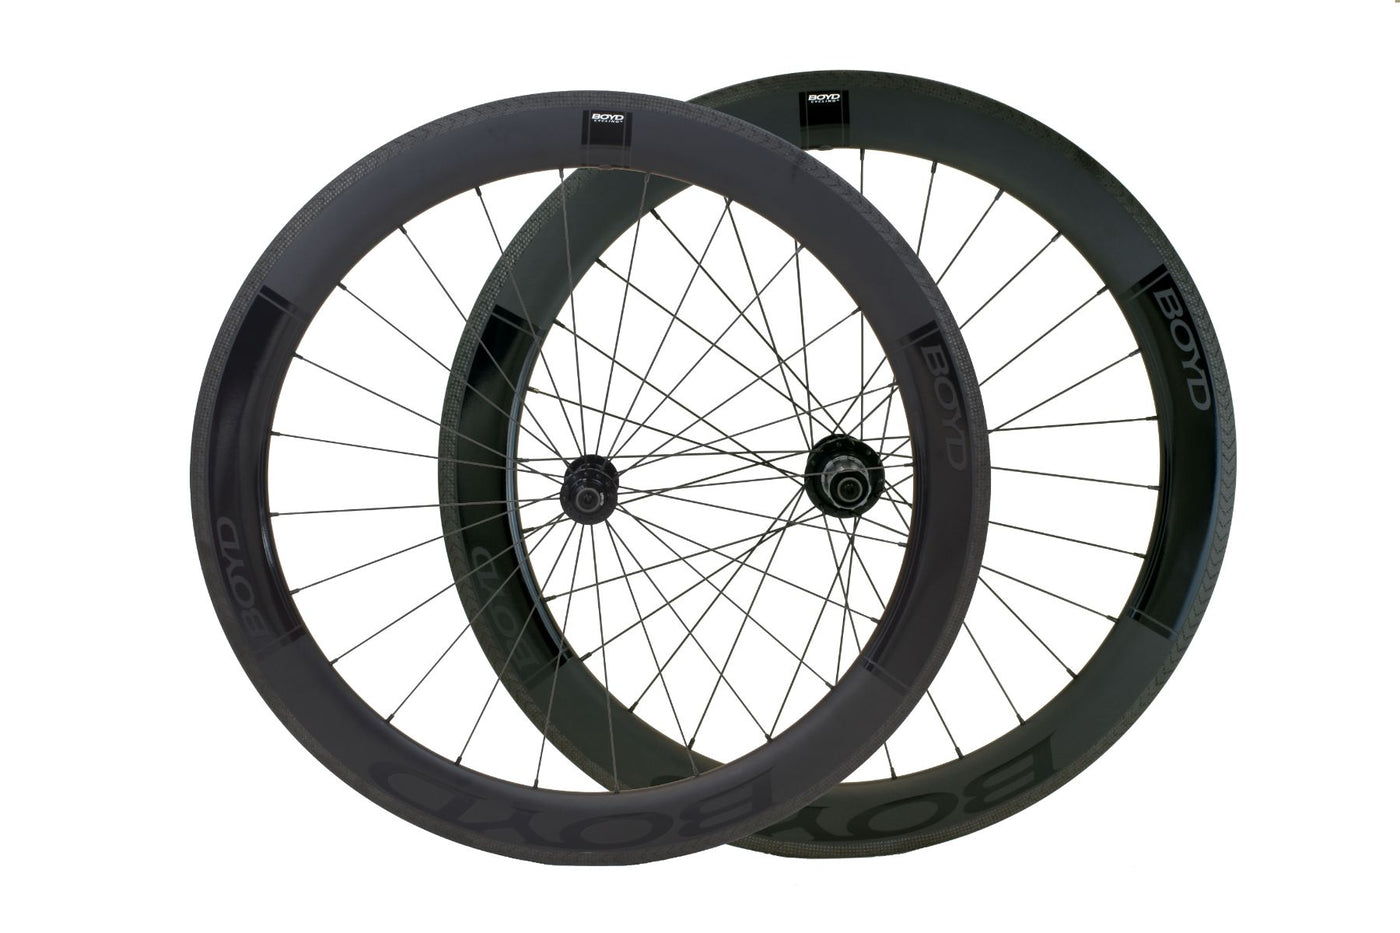 60mm Carbon Clincher Rear Wheel